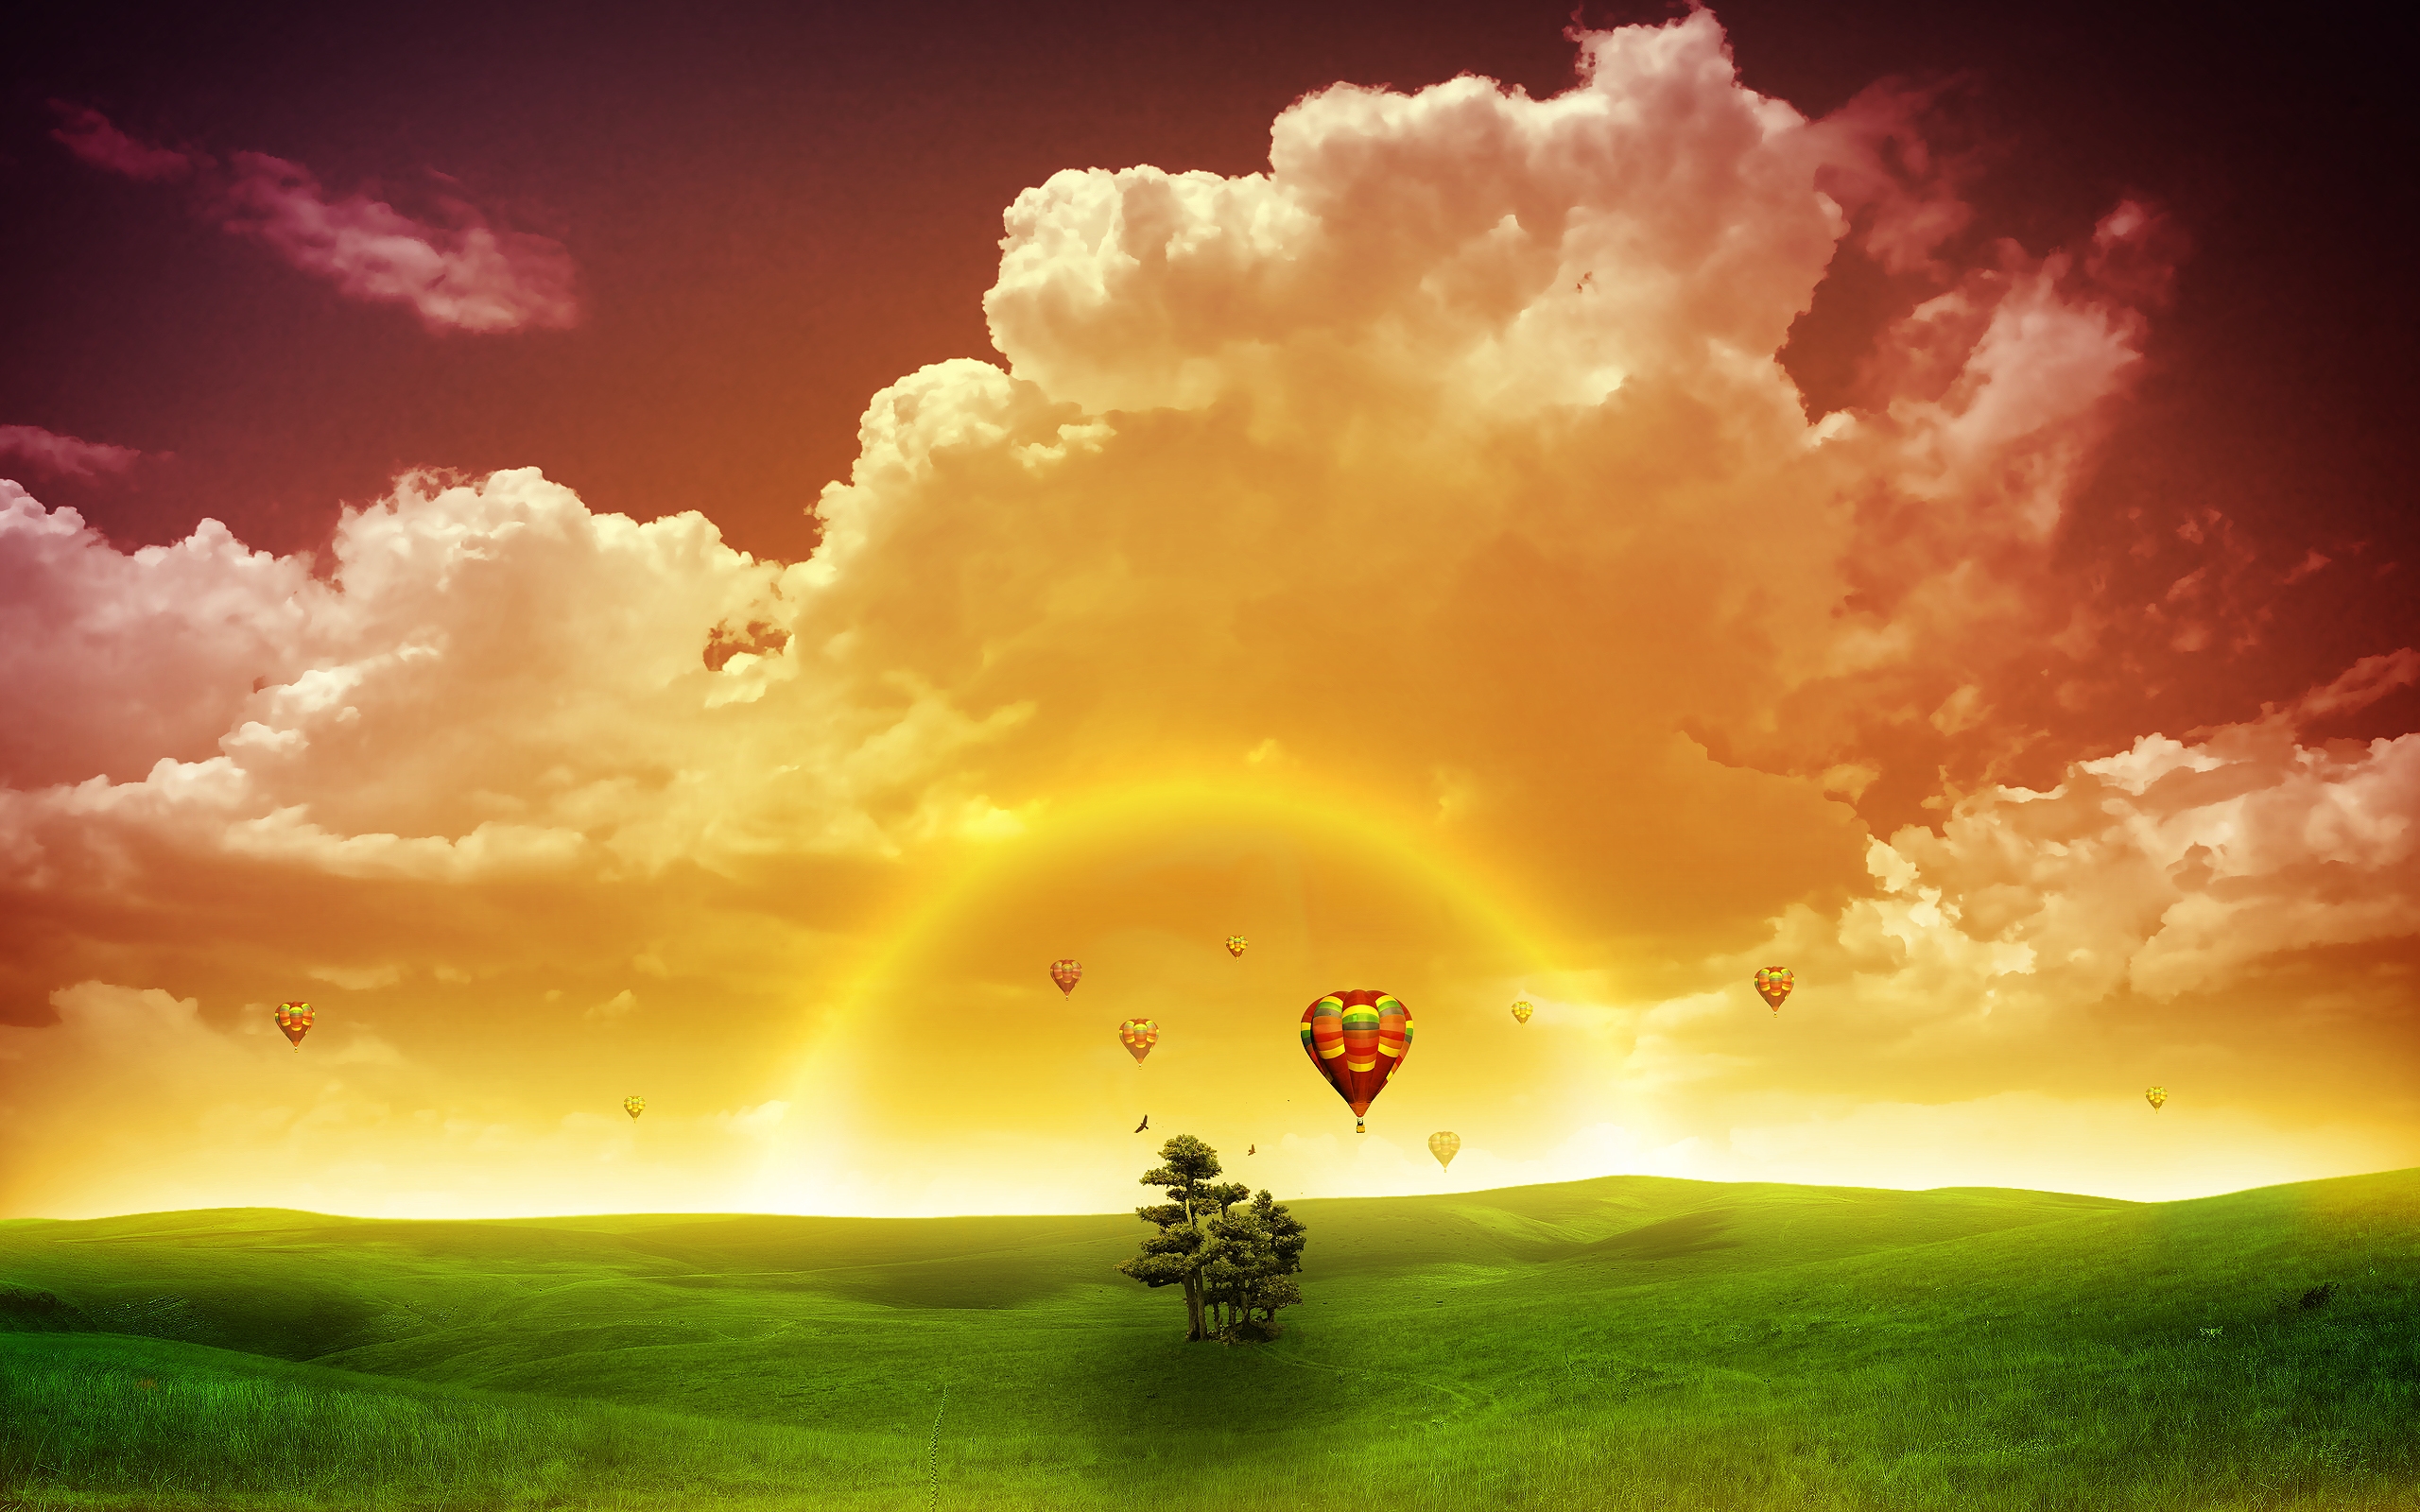 tree, artistic, surreal, fantasy, field, hot air balloon